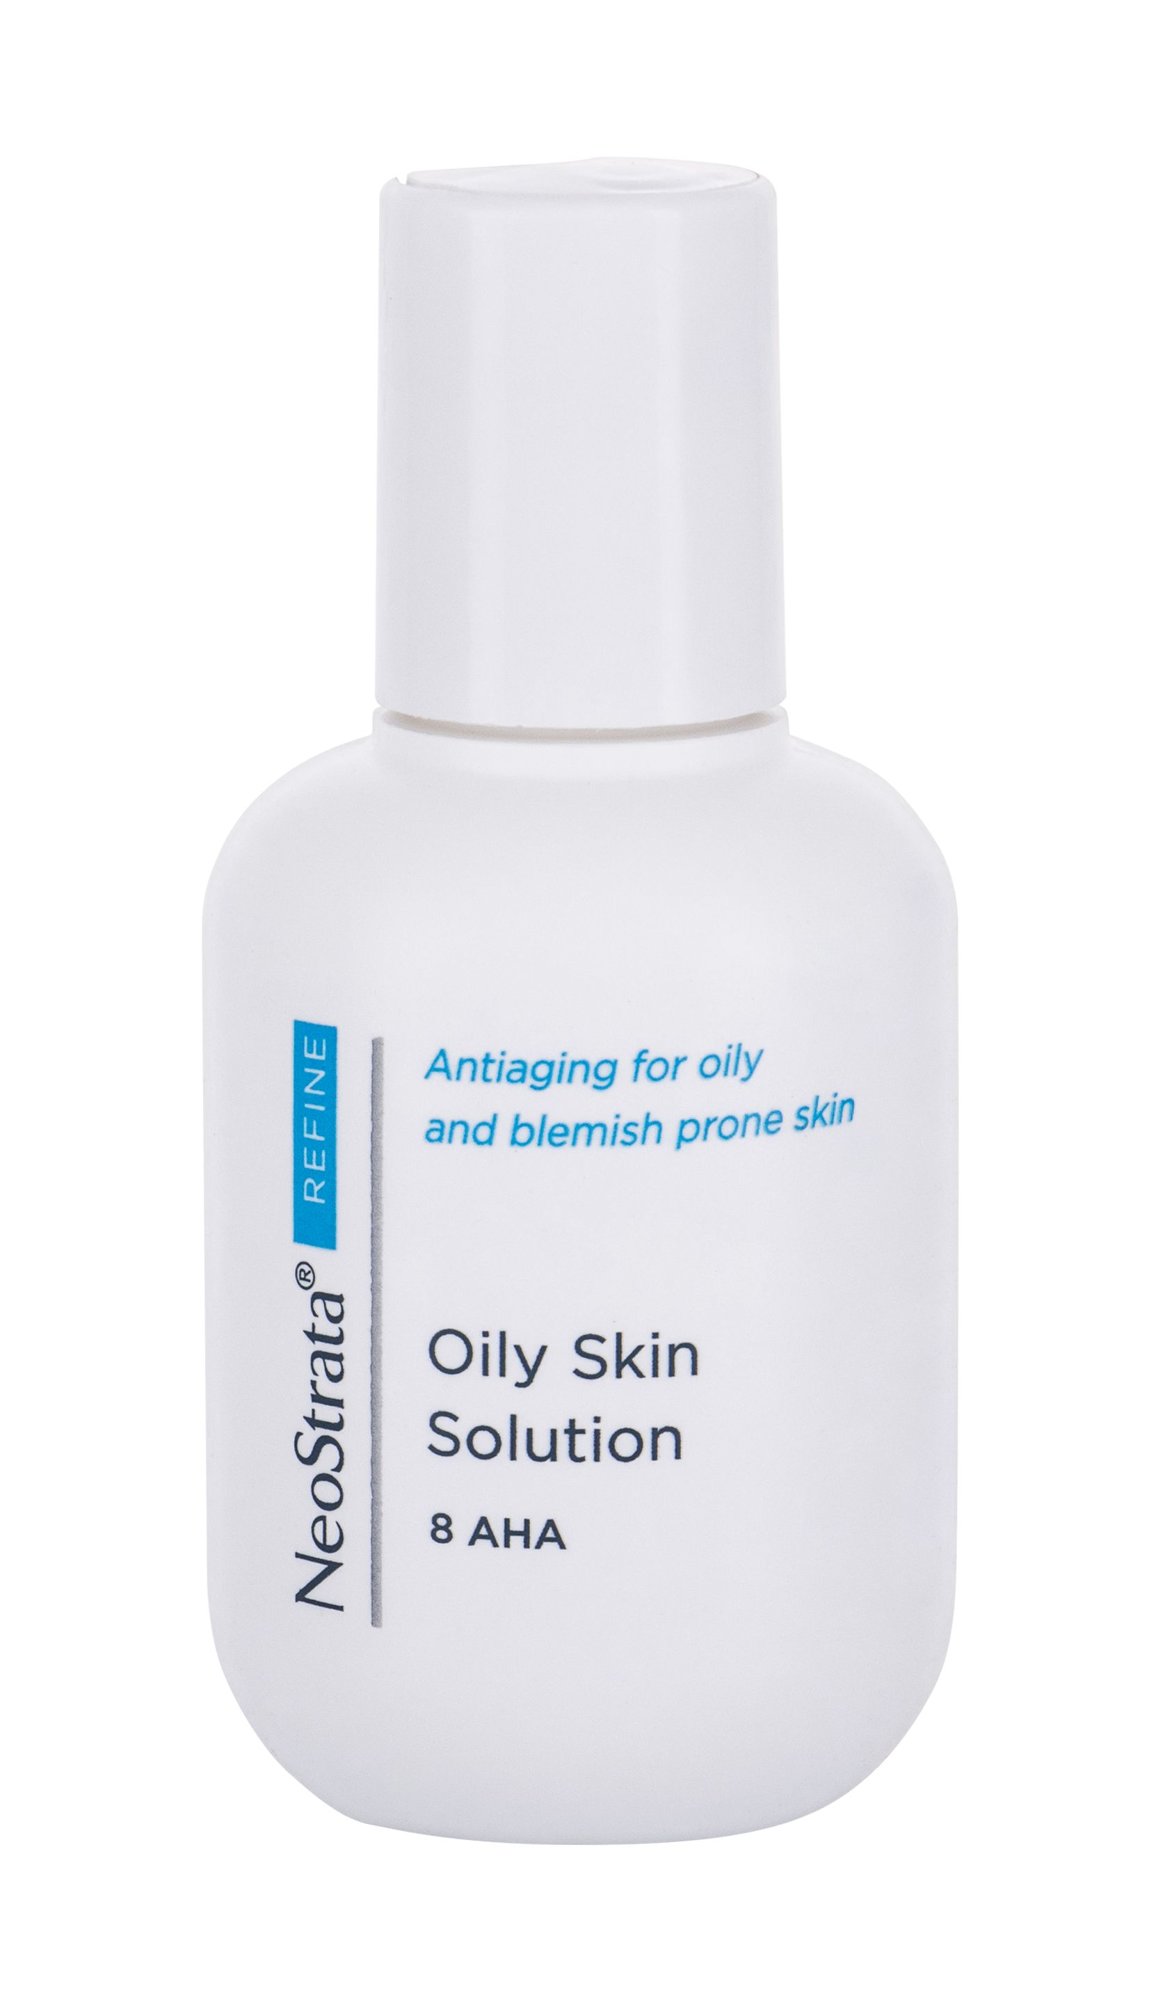 NeoStrata Refine Oily Skin Solution 100ml valomasis vanduo veidui